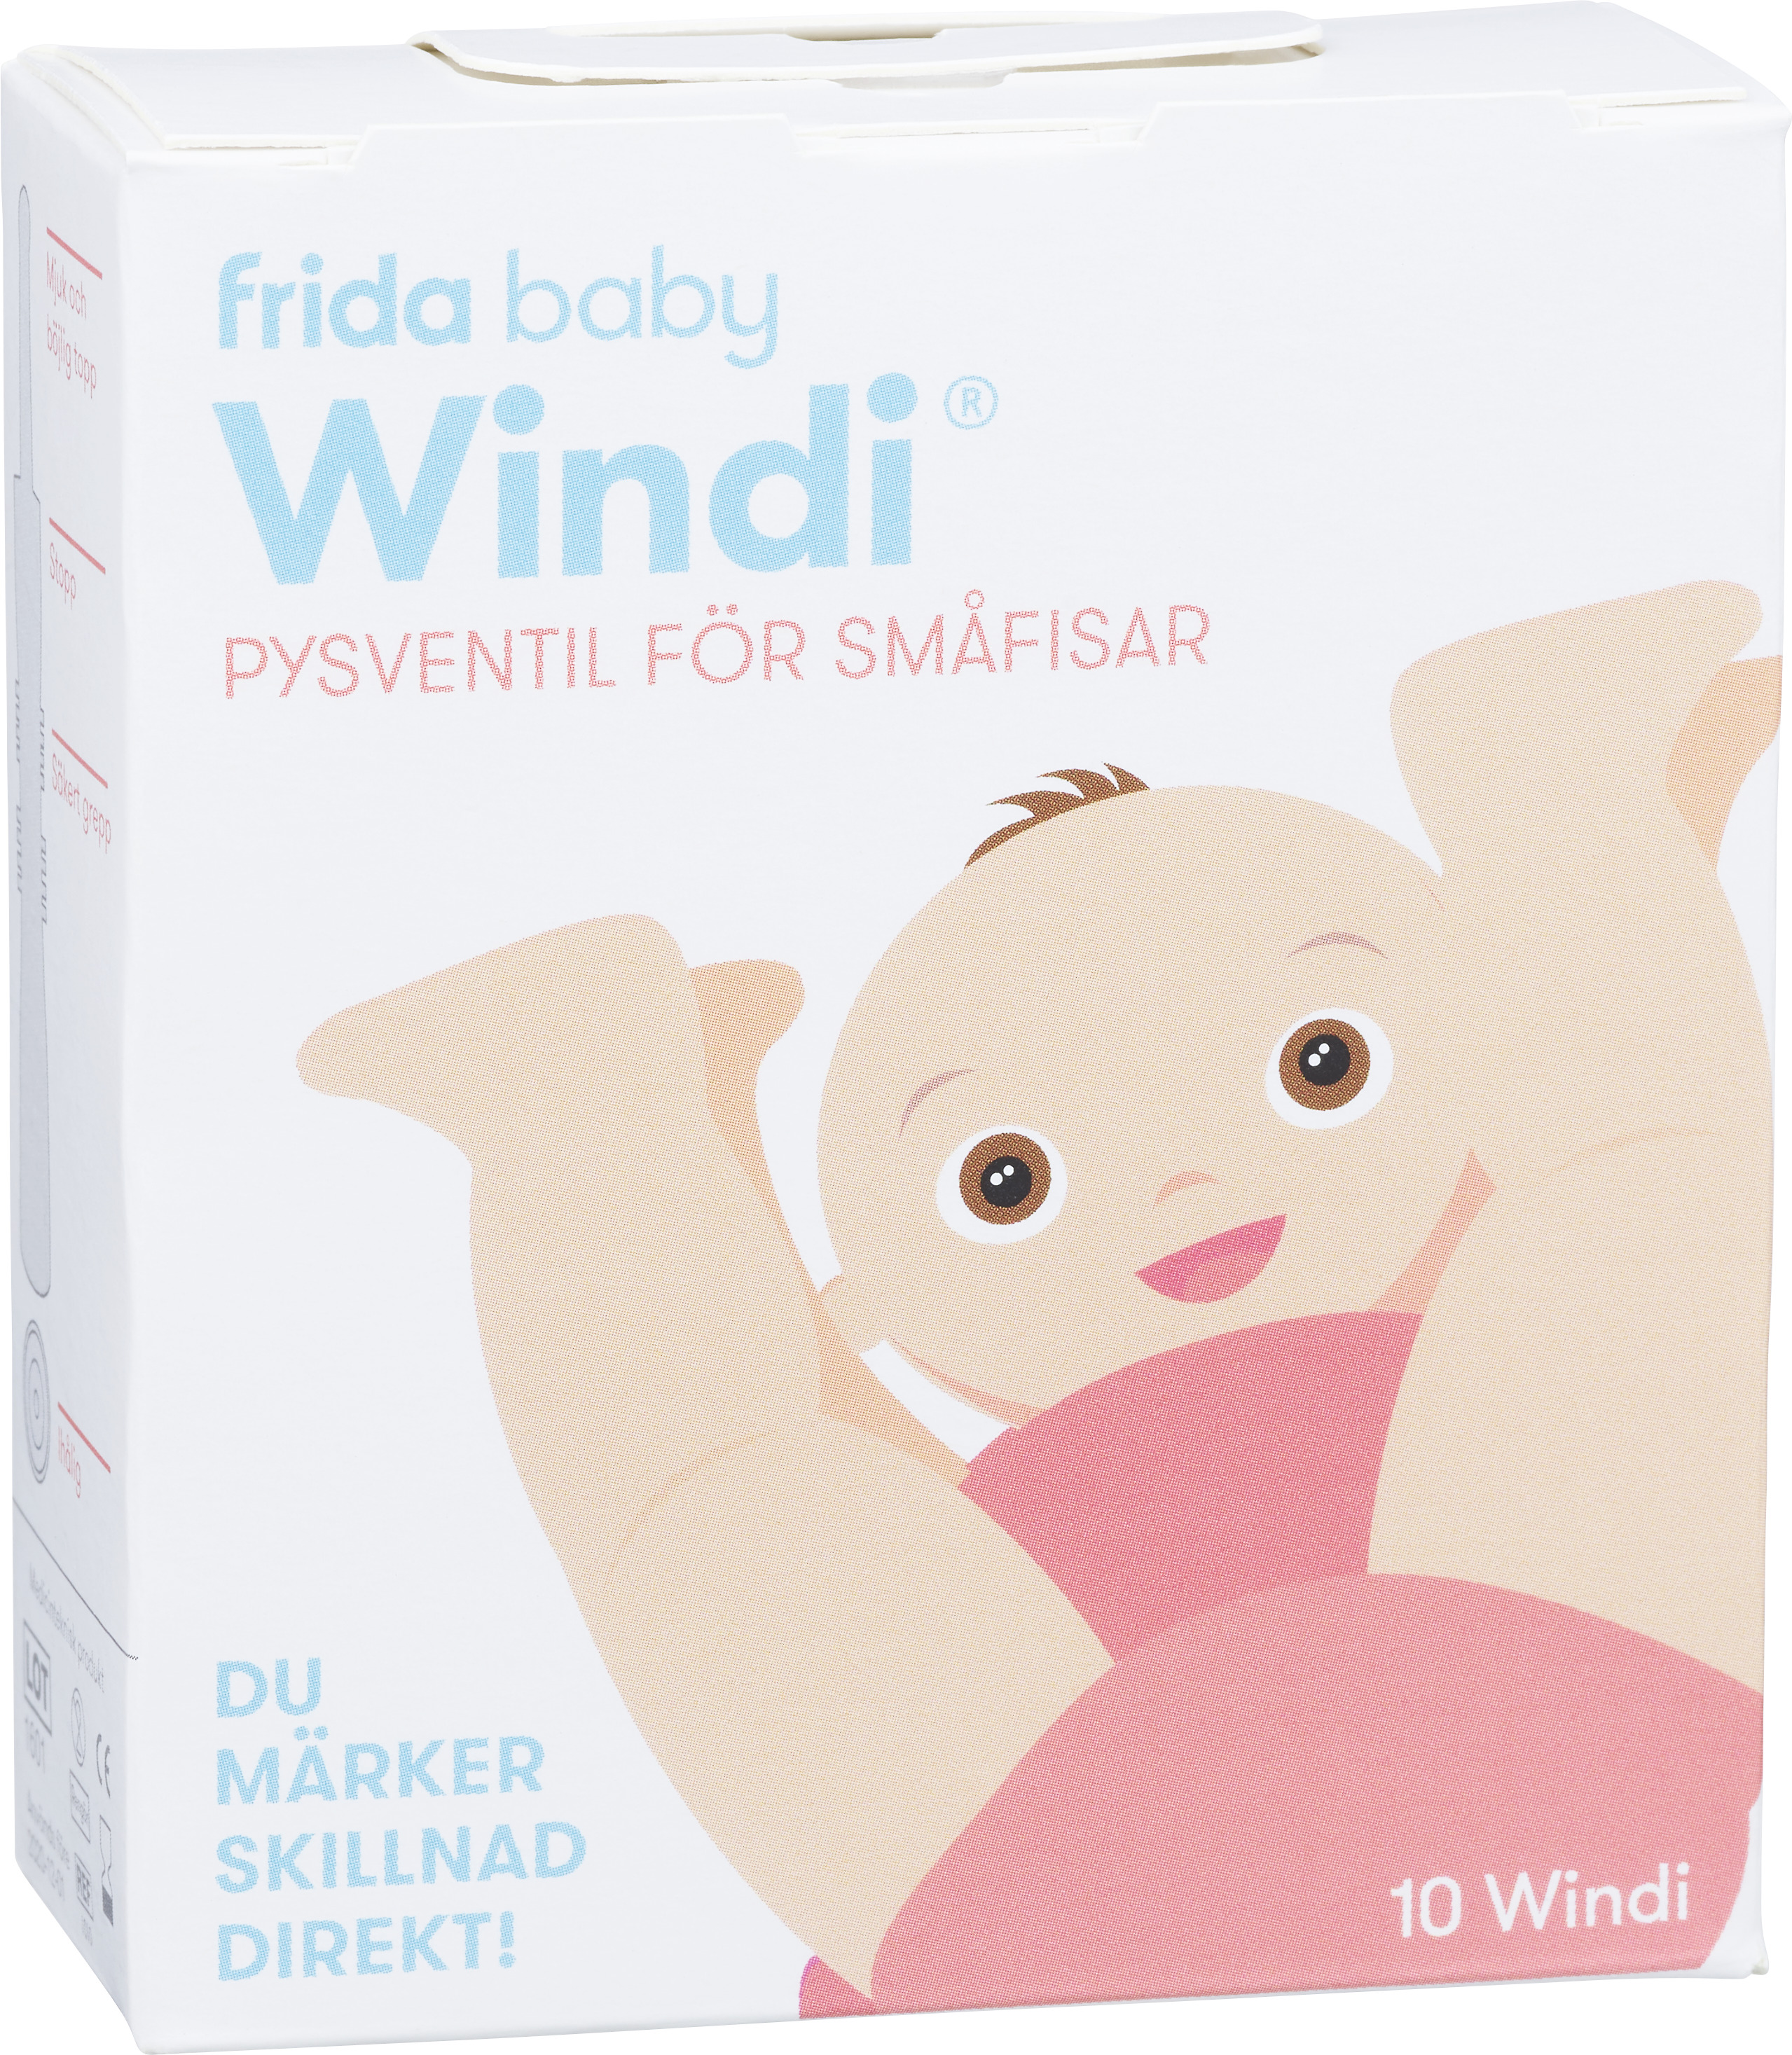 Köp Frida Baby Näsfrida Hygienfilter 20 st på